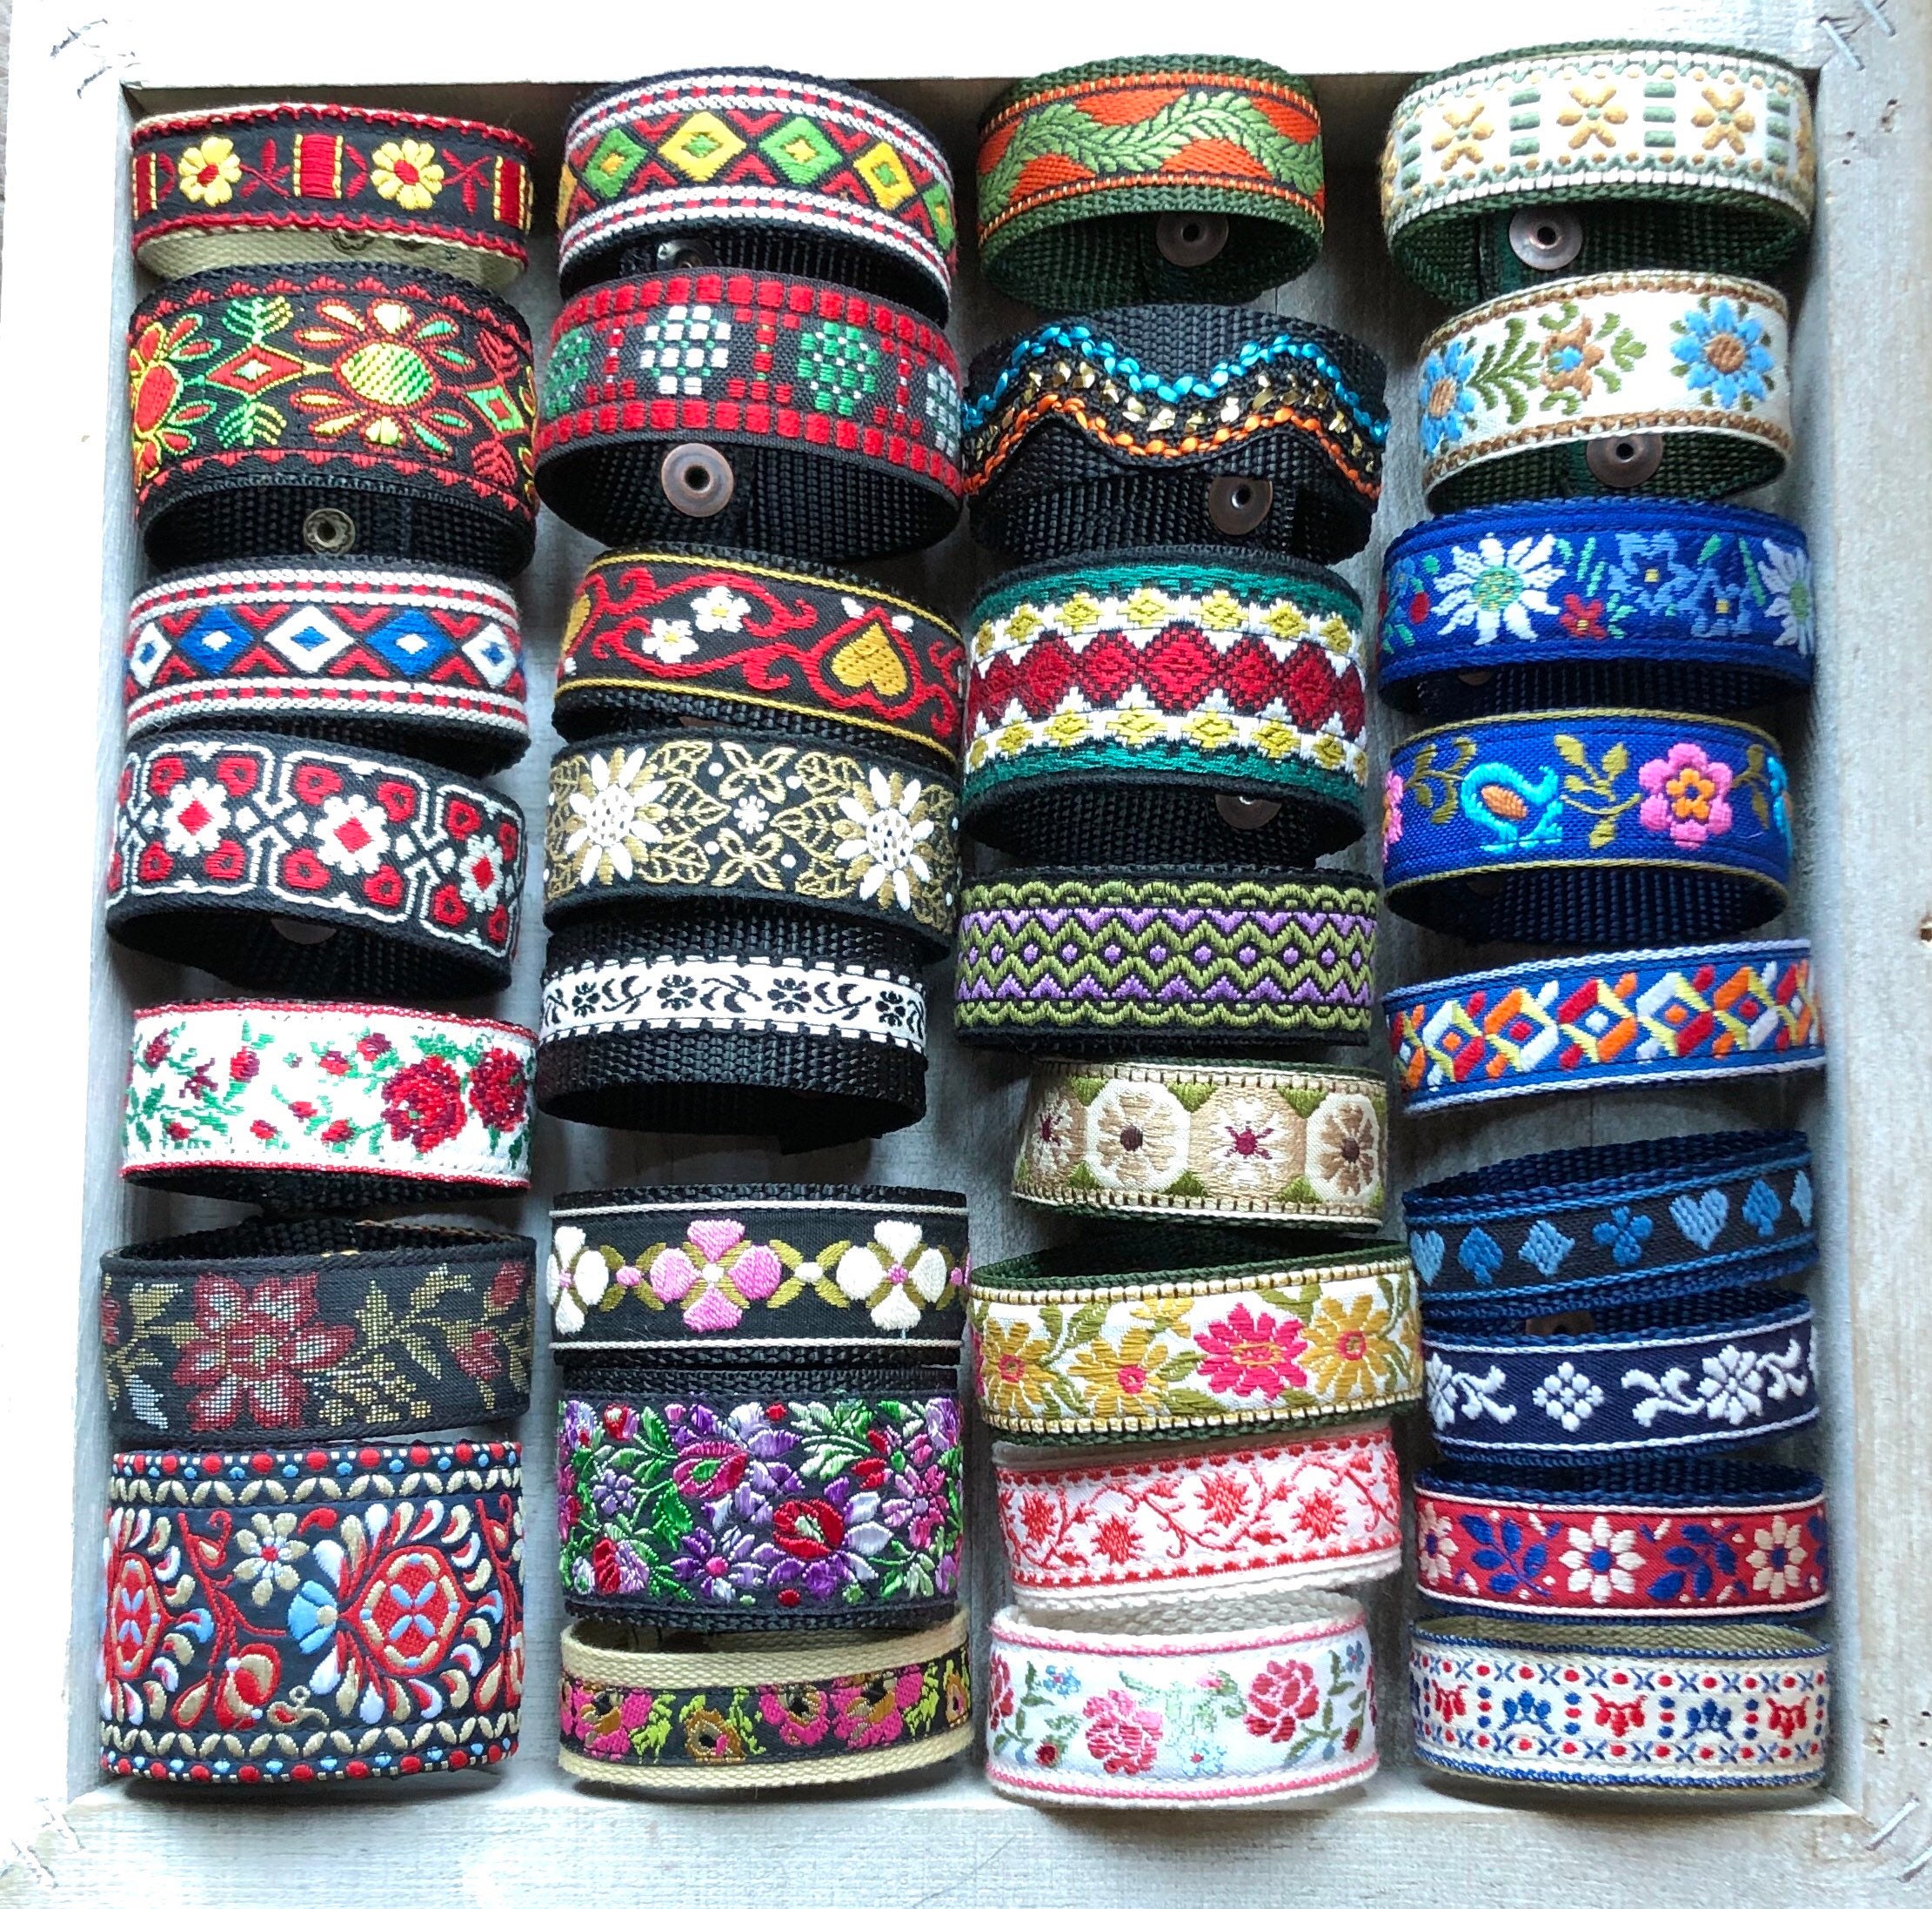 WWJD Bracelets in Assorted Light Colors - Pack of 150